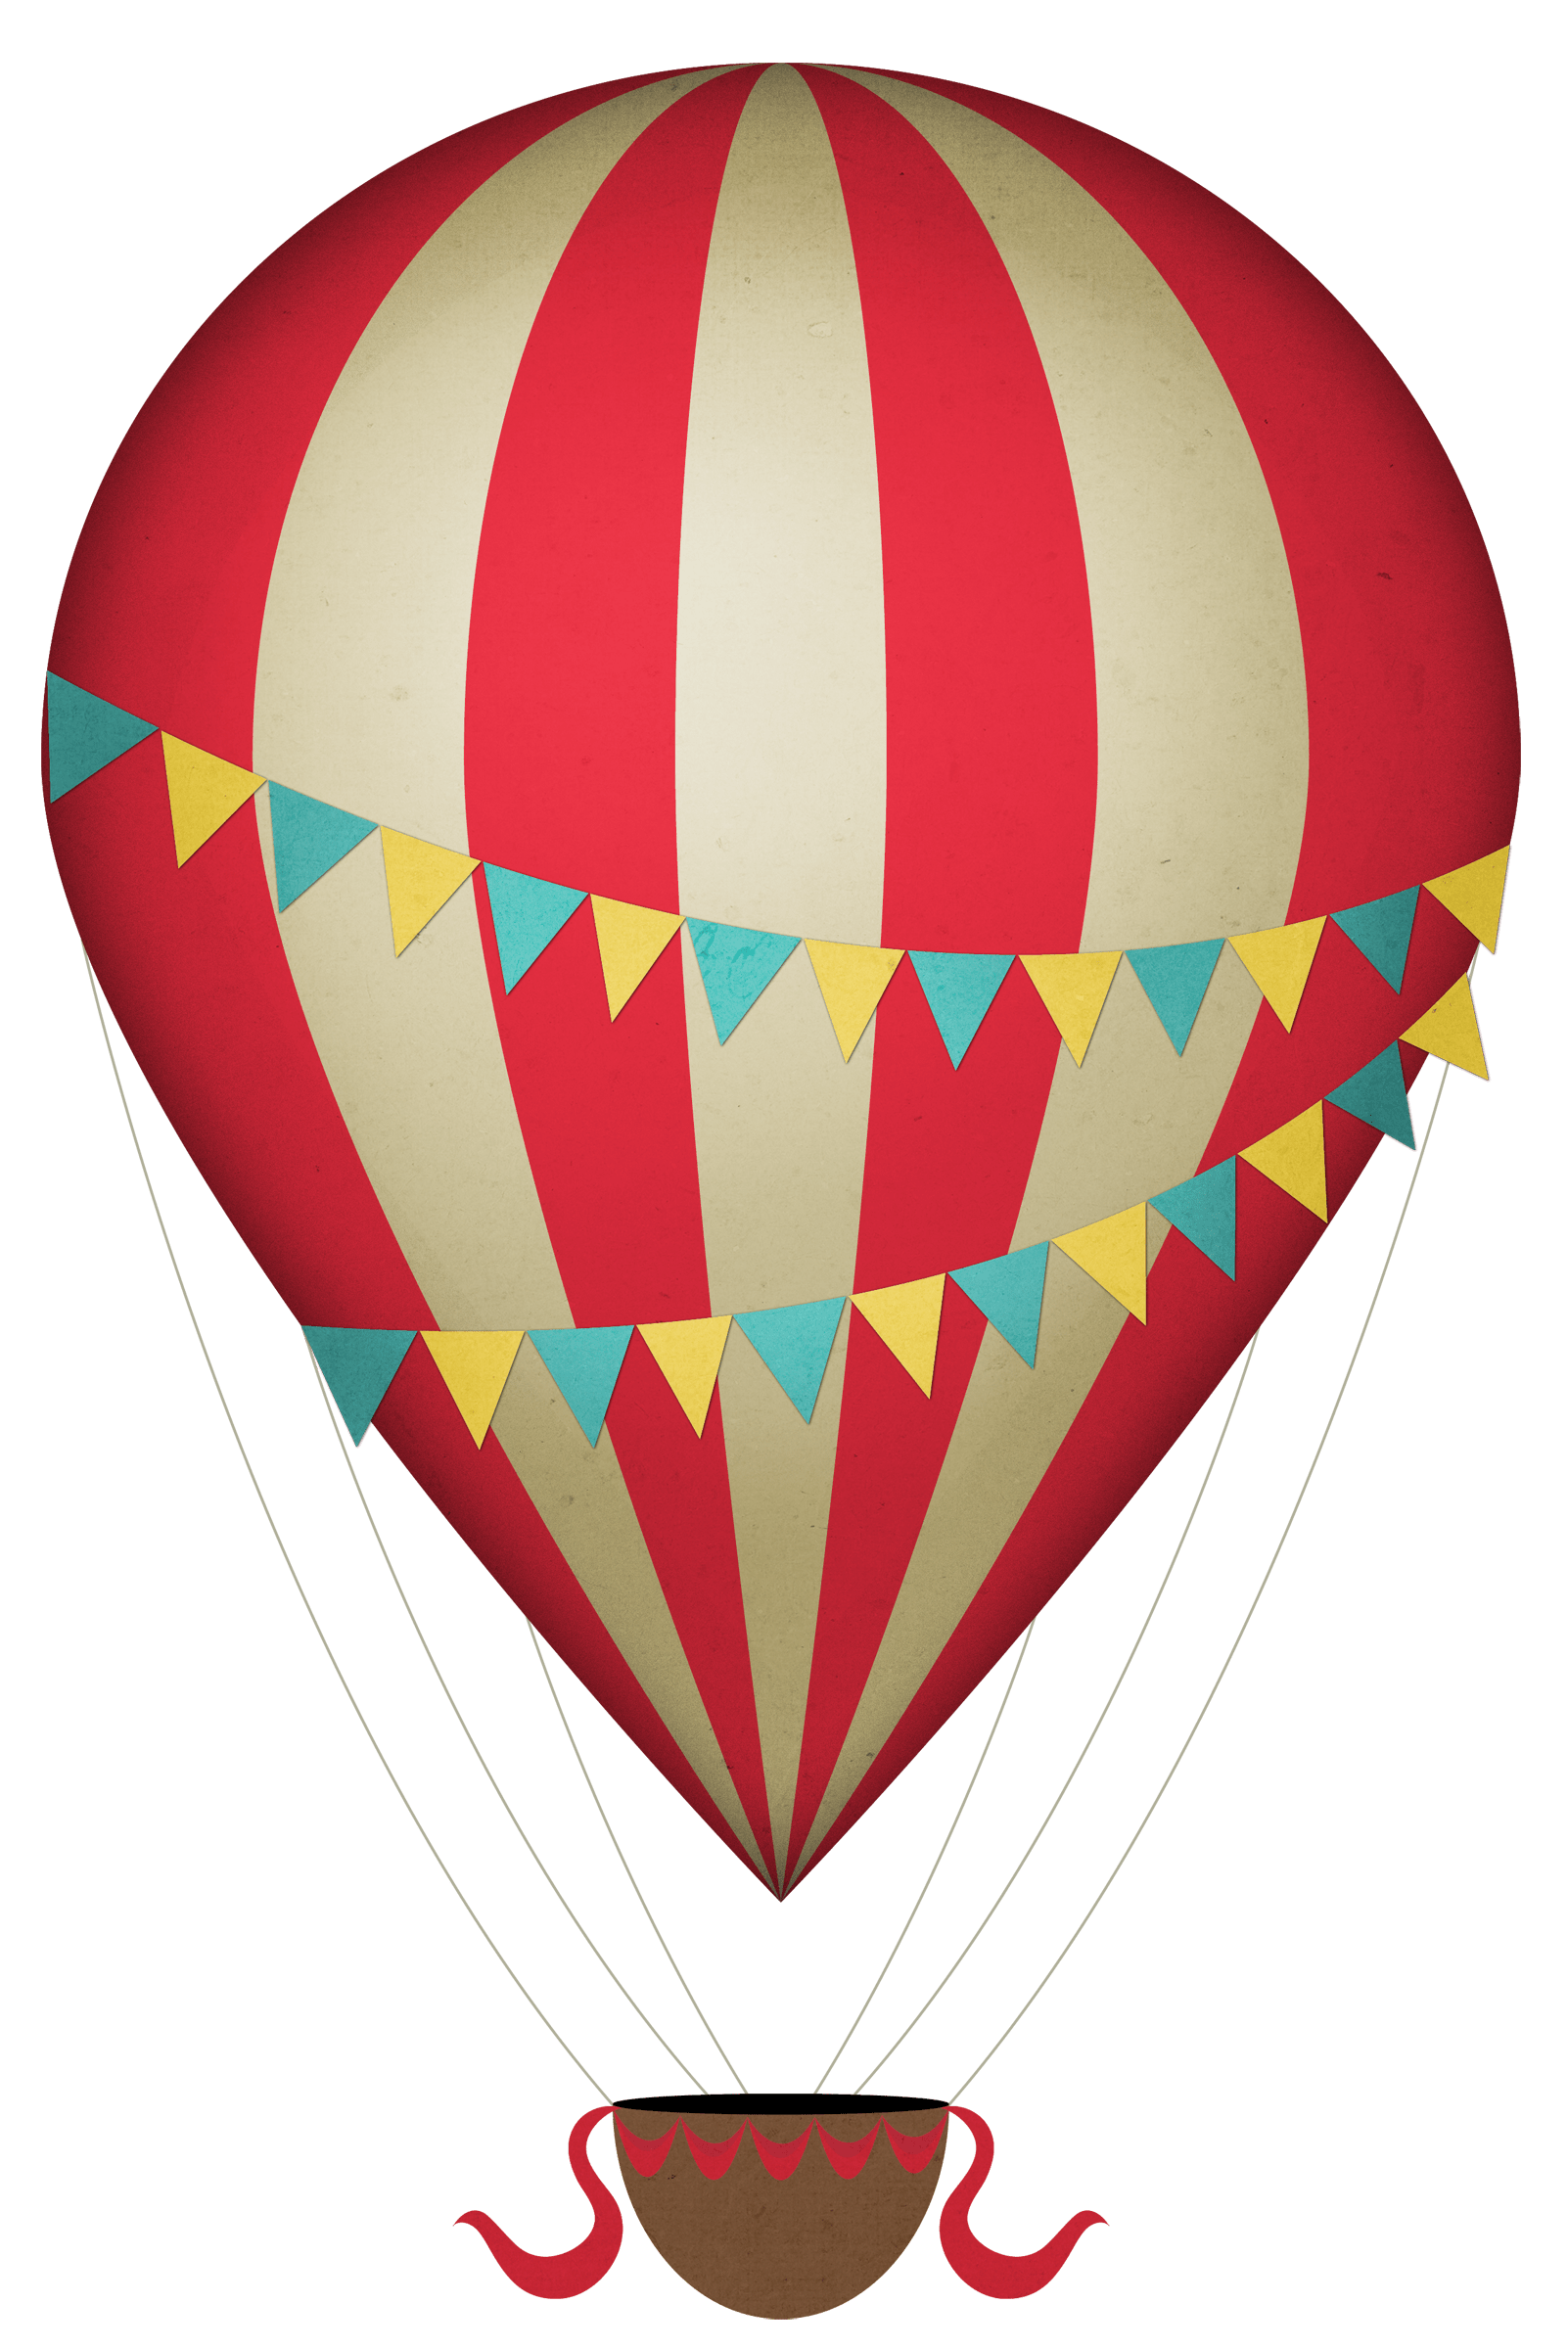 Vintage Clipart Hot Air Balloon transparent PNG - StickPNG